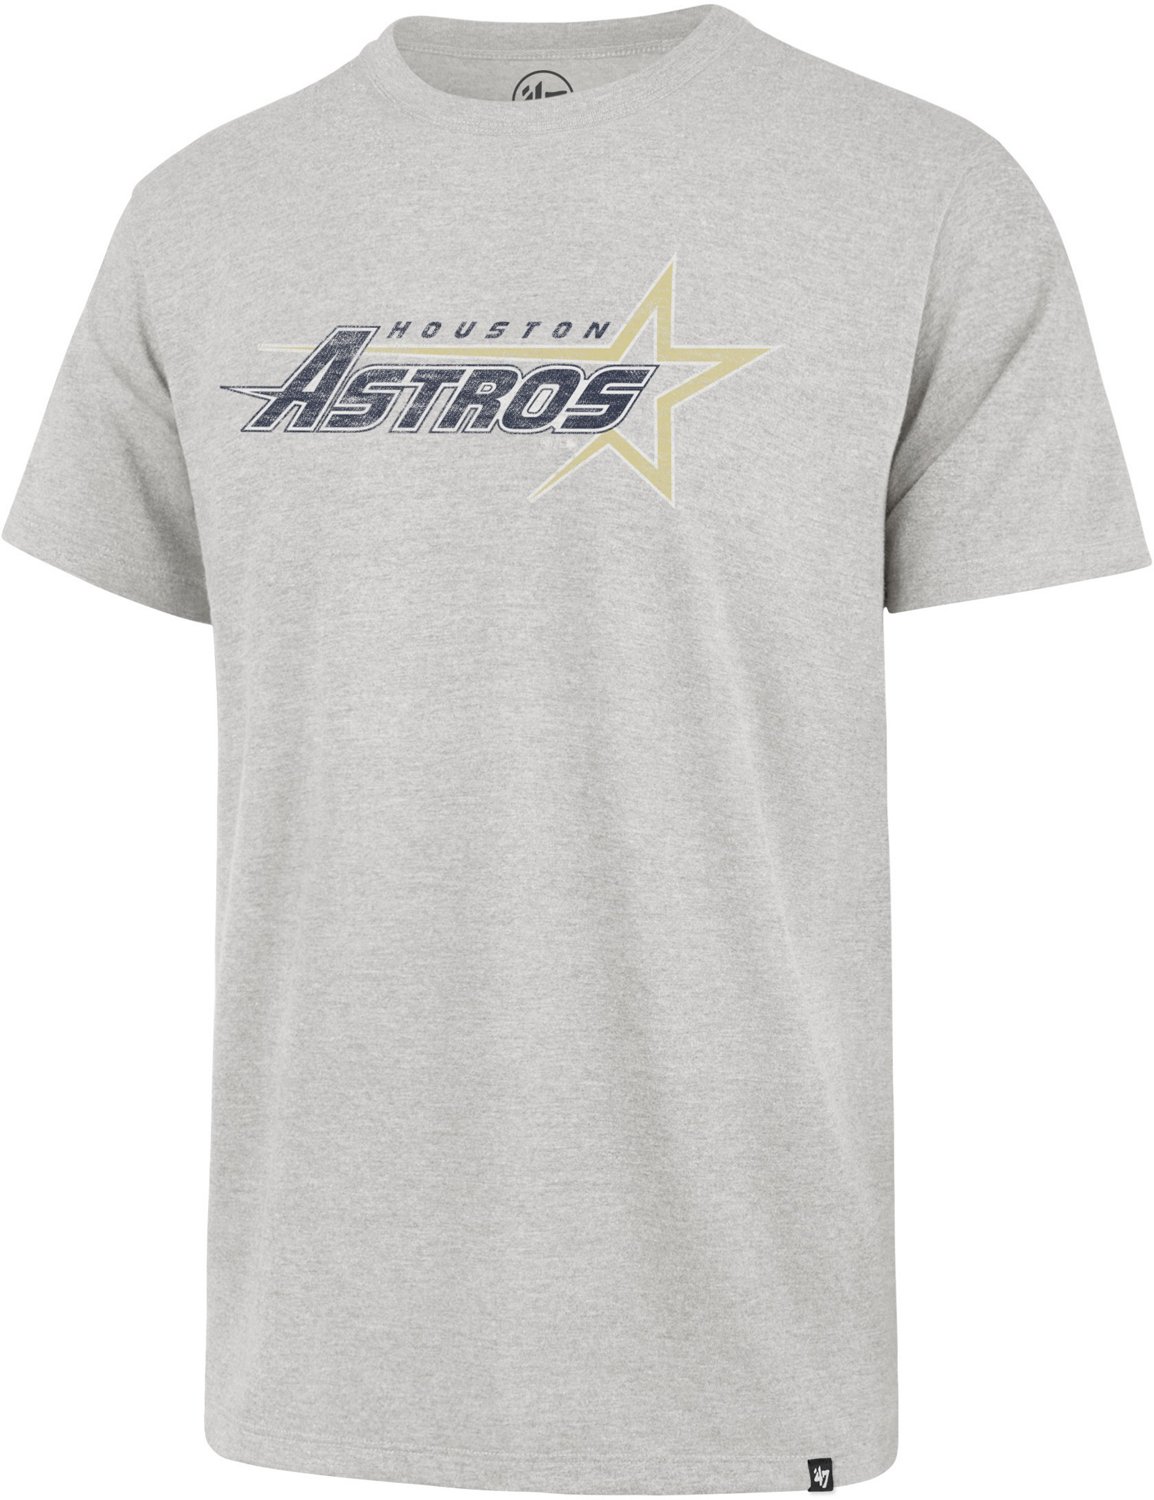 astros t shirt target